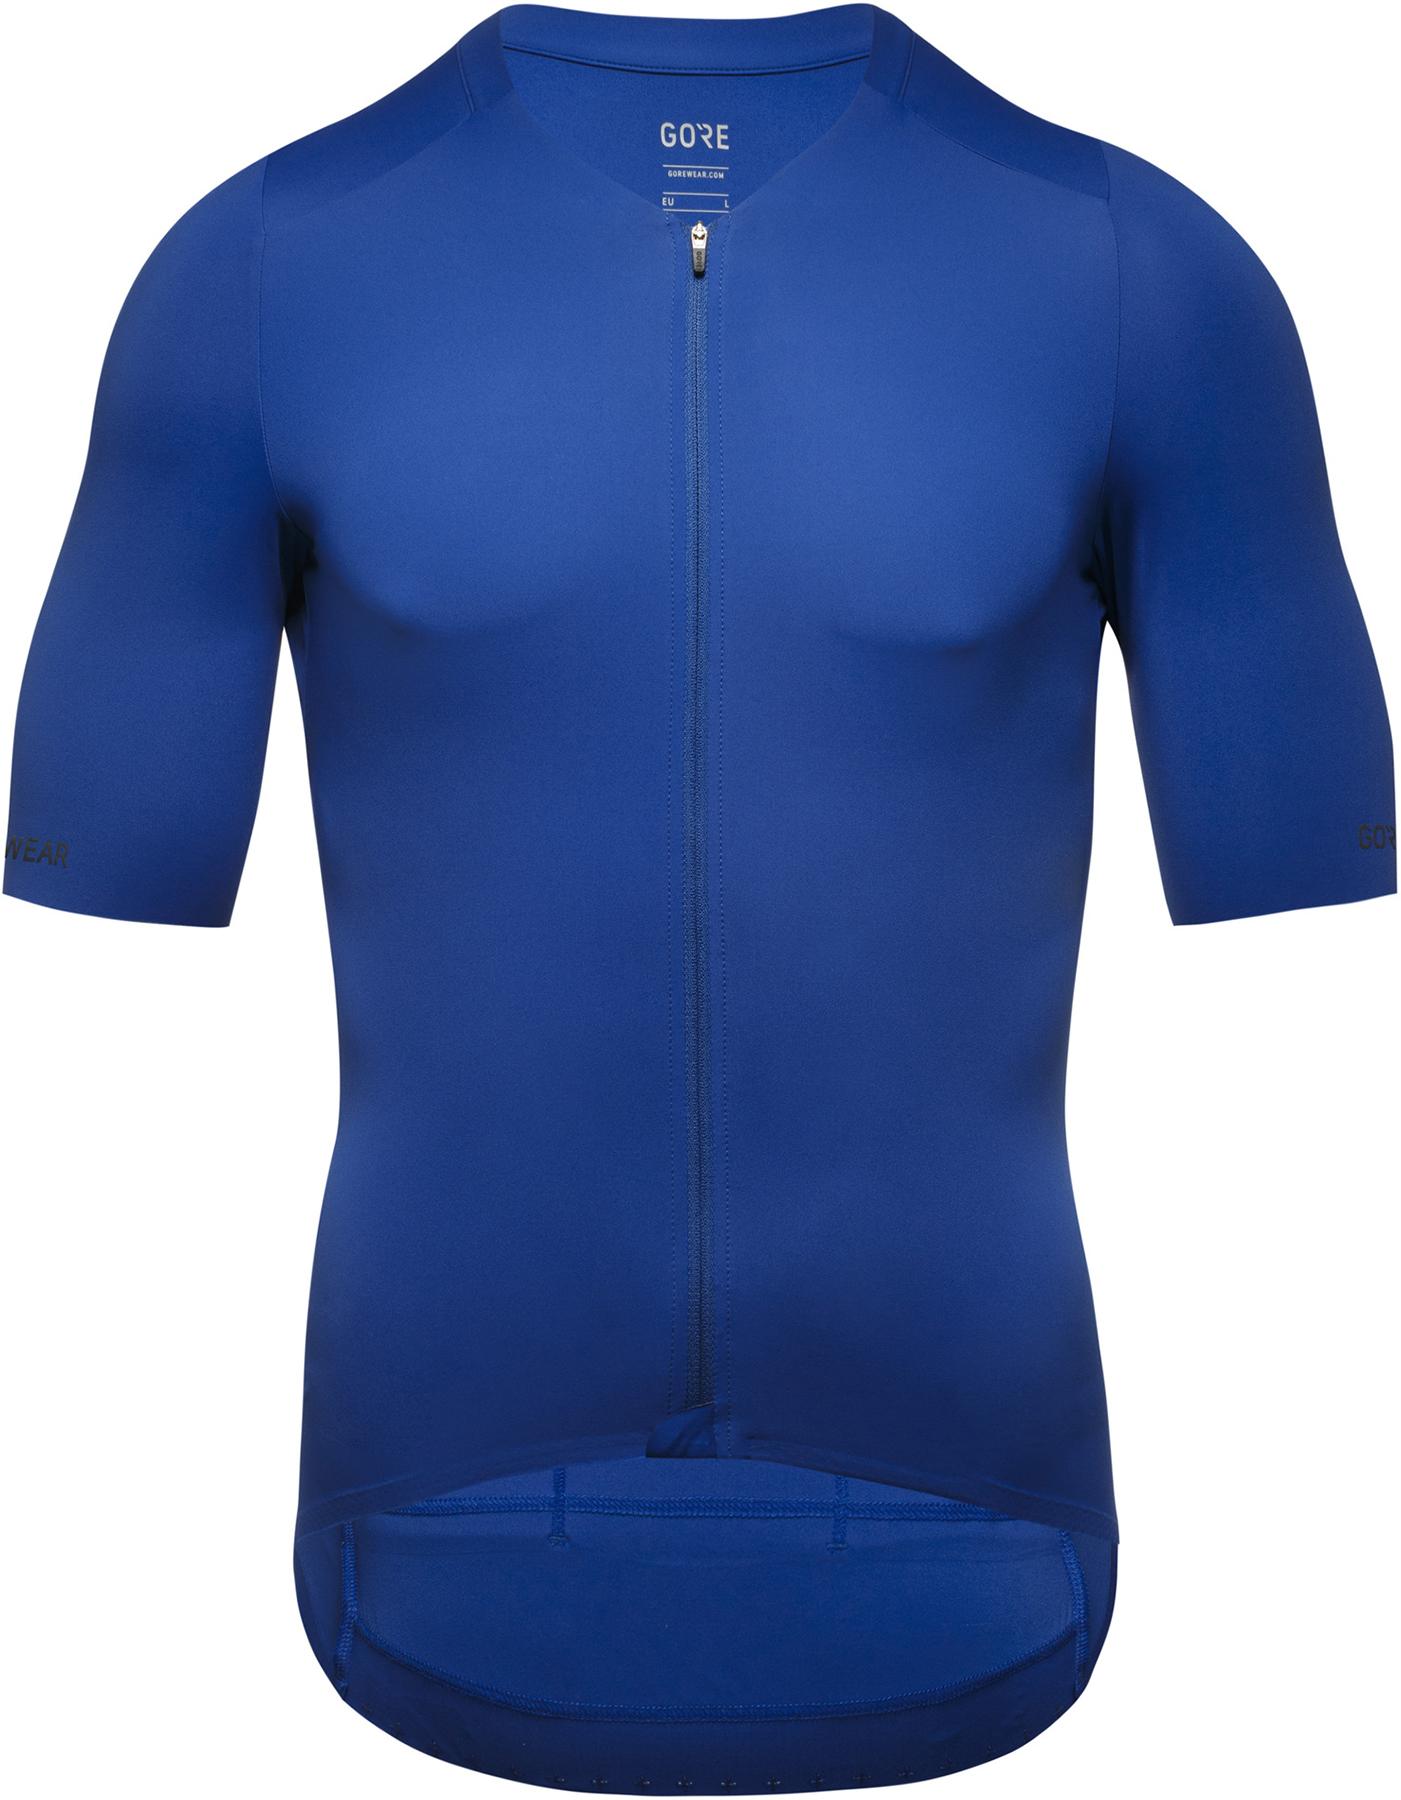 Gorewear Distance Jersey - Ultramarine Blue